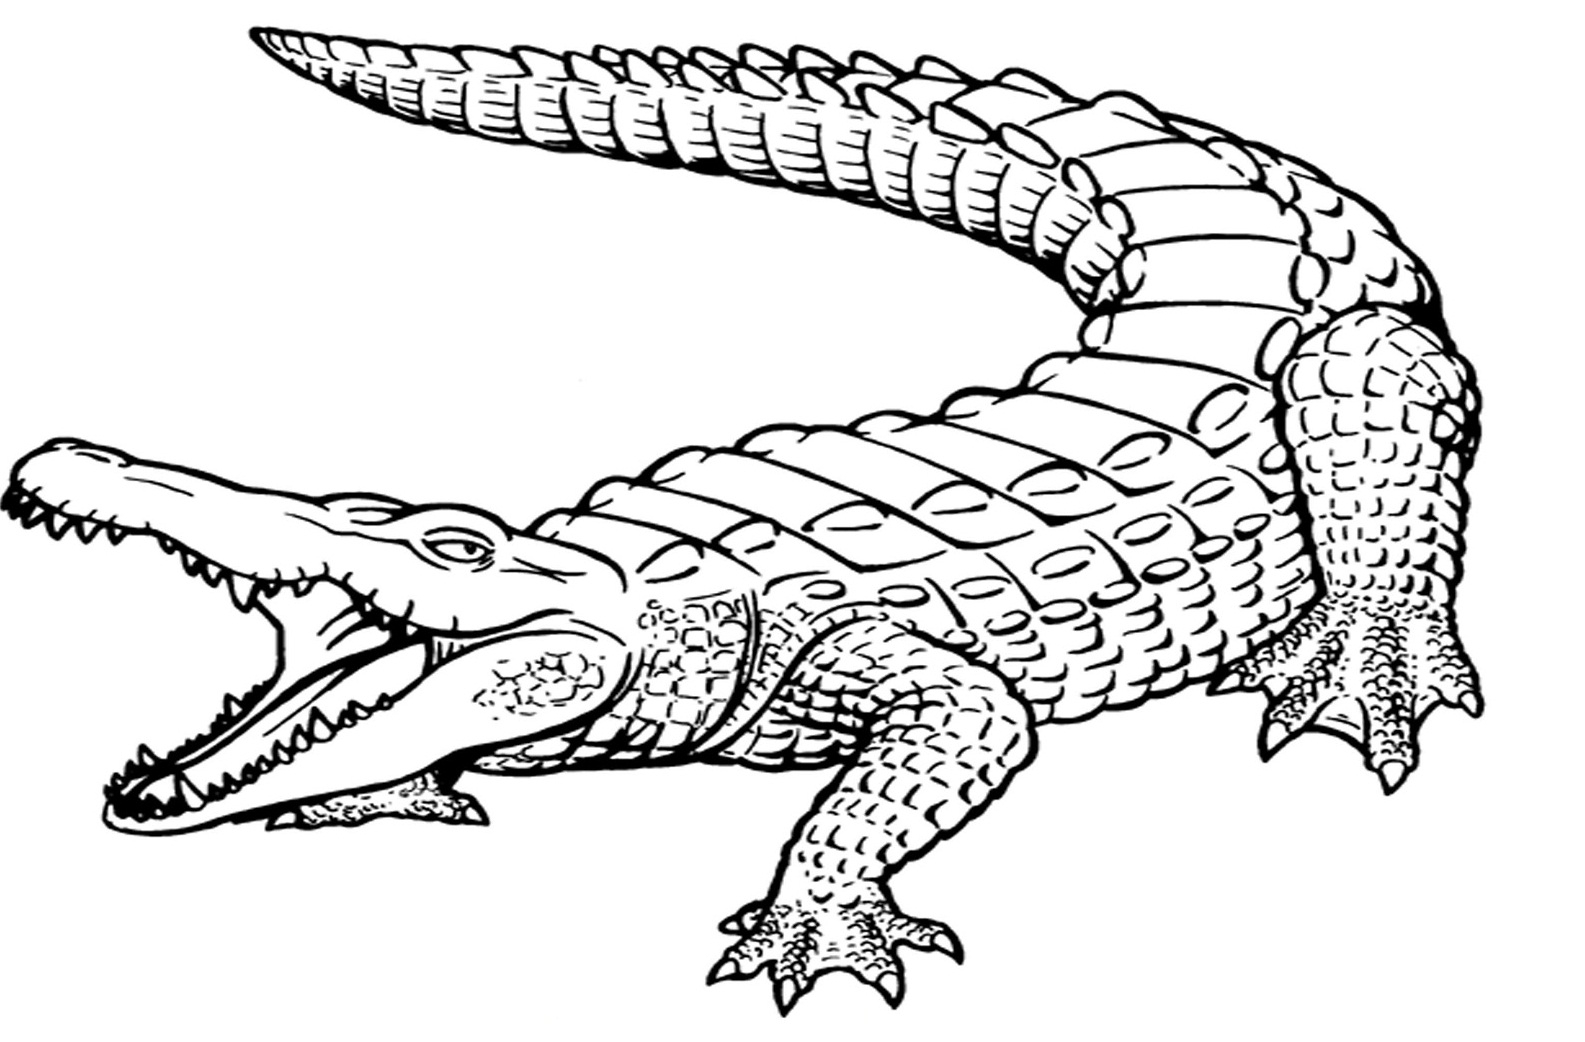 Nile Crocodile Coloring Page at GetDrawings  Free download